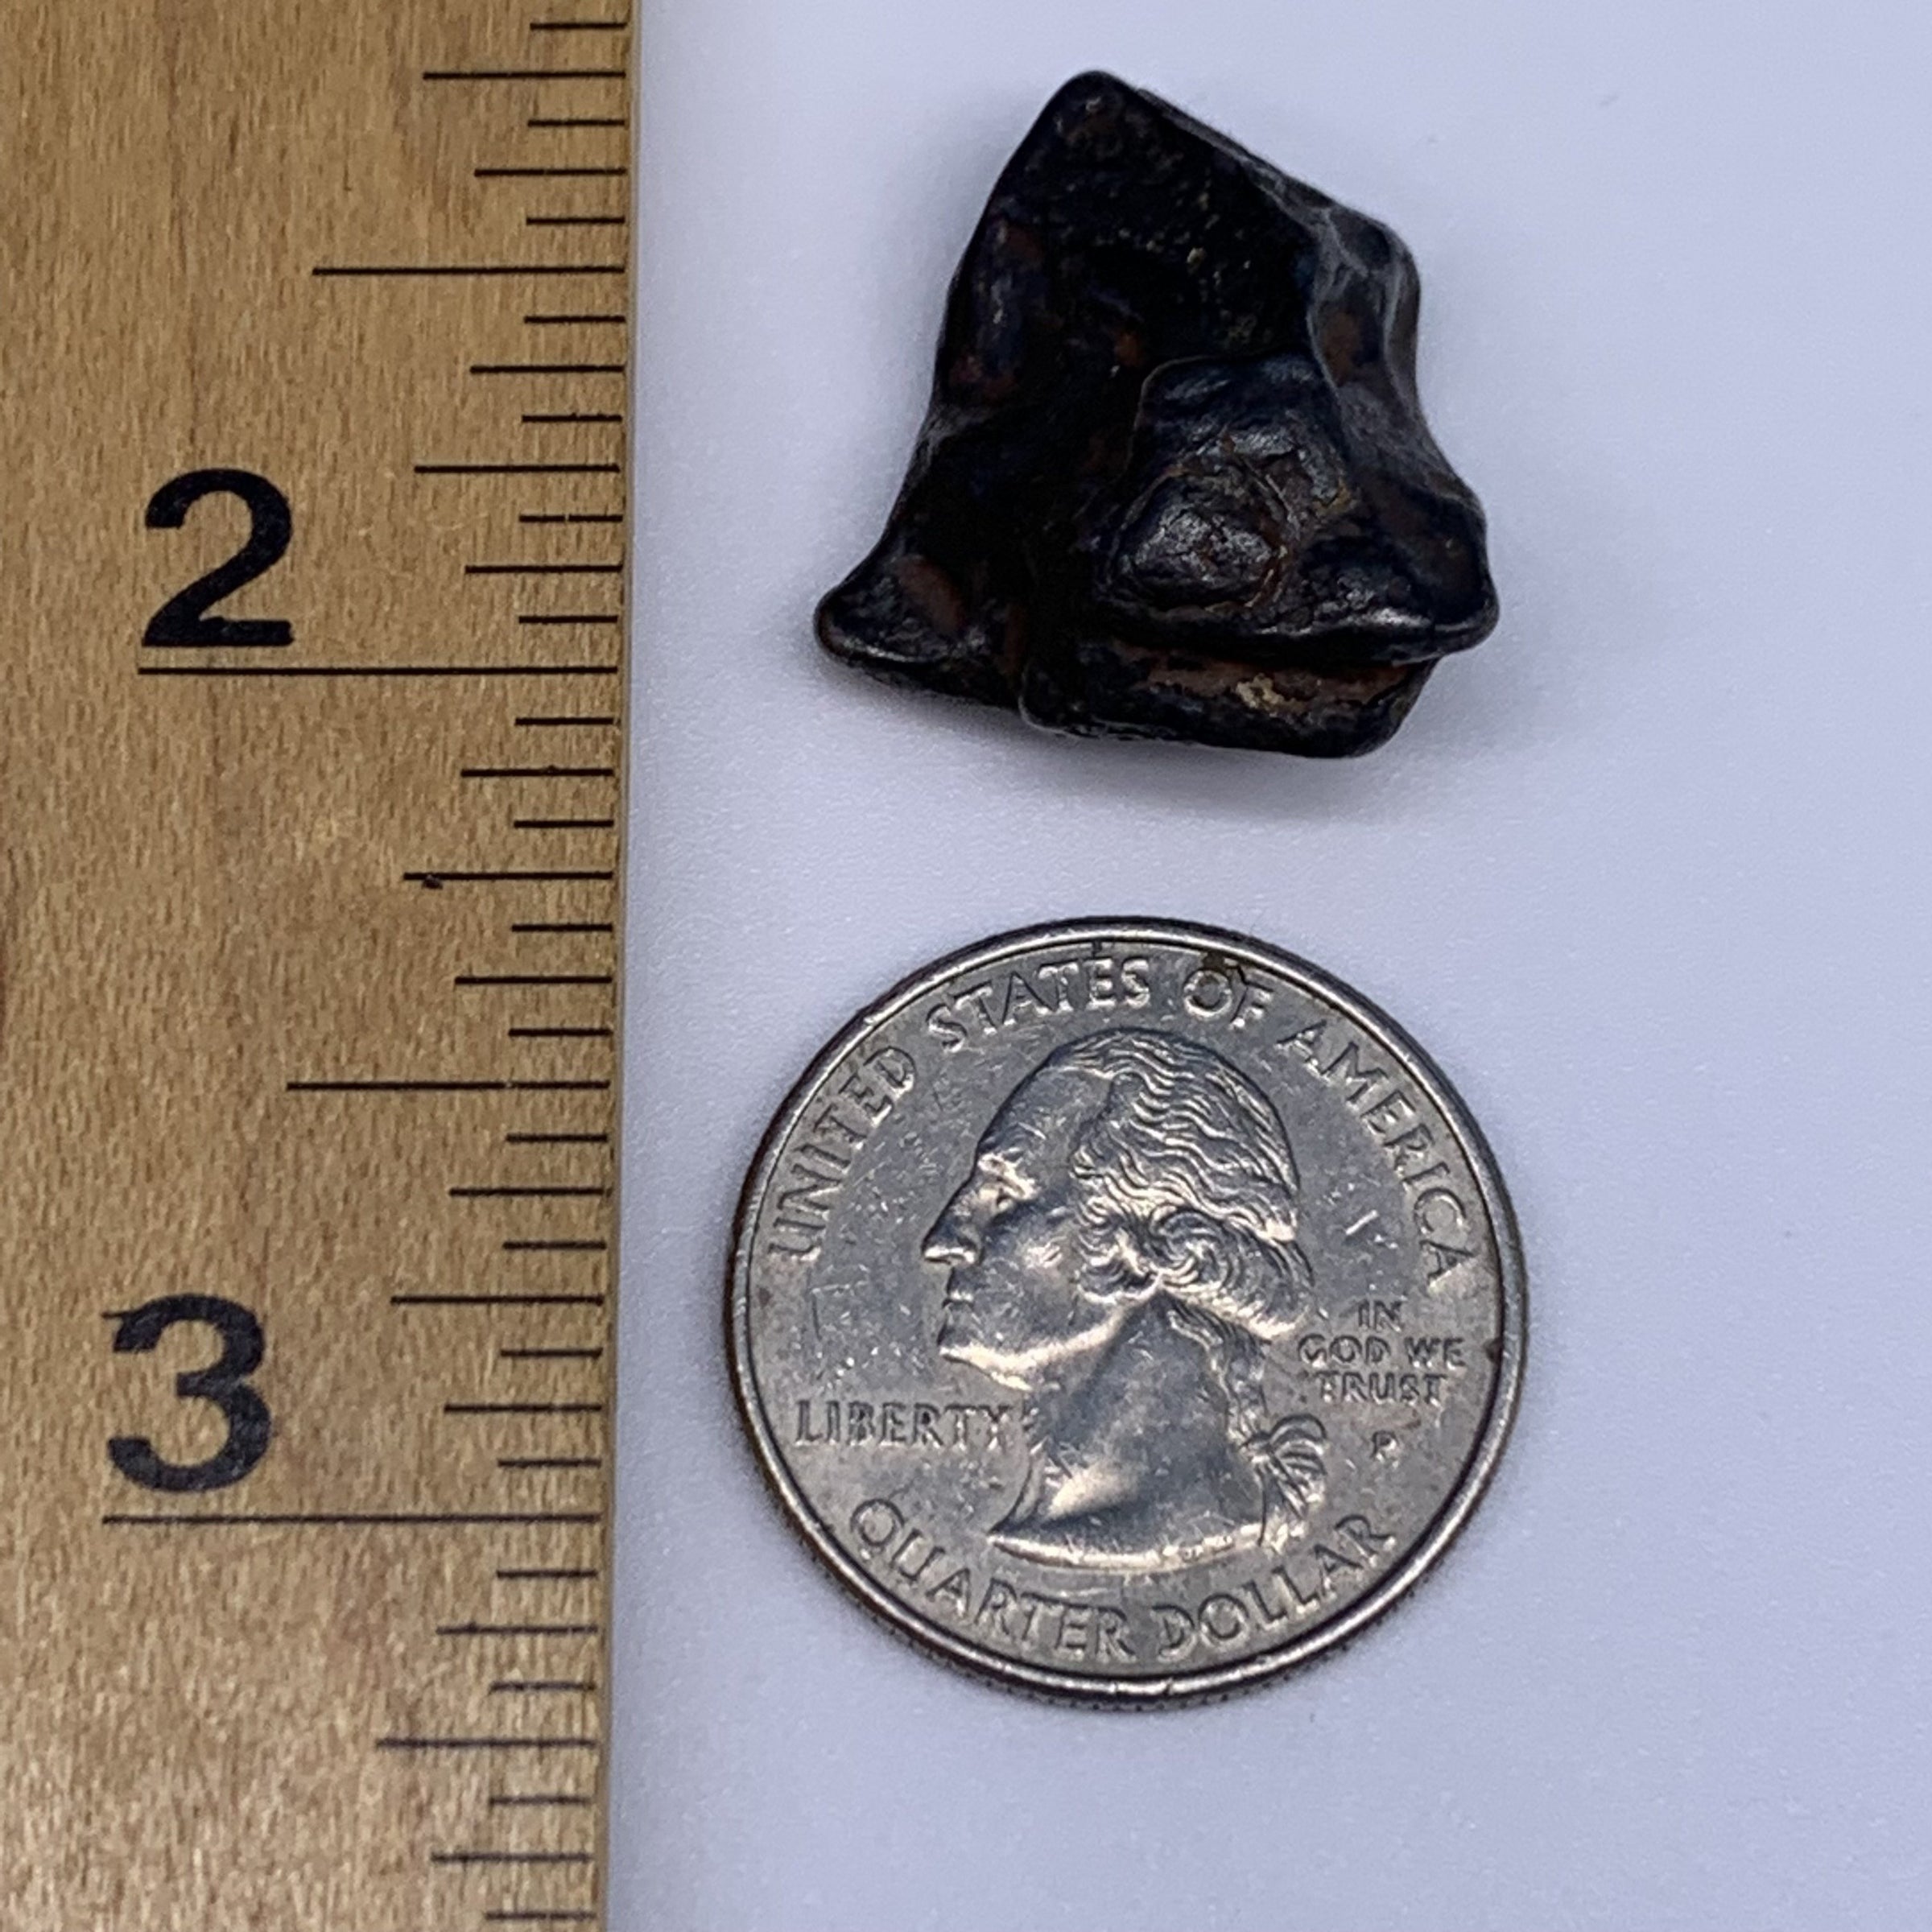 Agoudal Imilchil Meteorite 14.7 grams 16-Moldavite Life